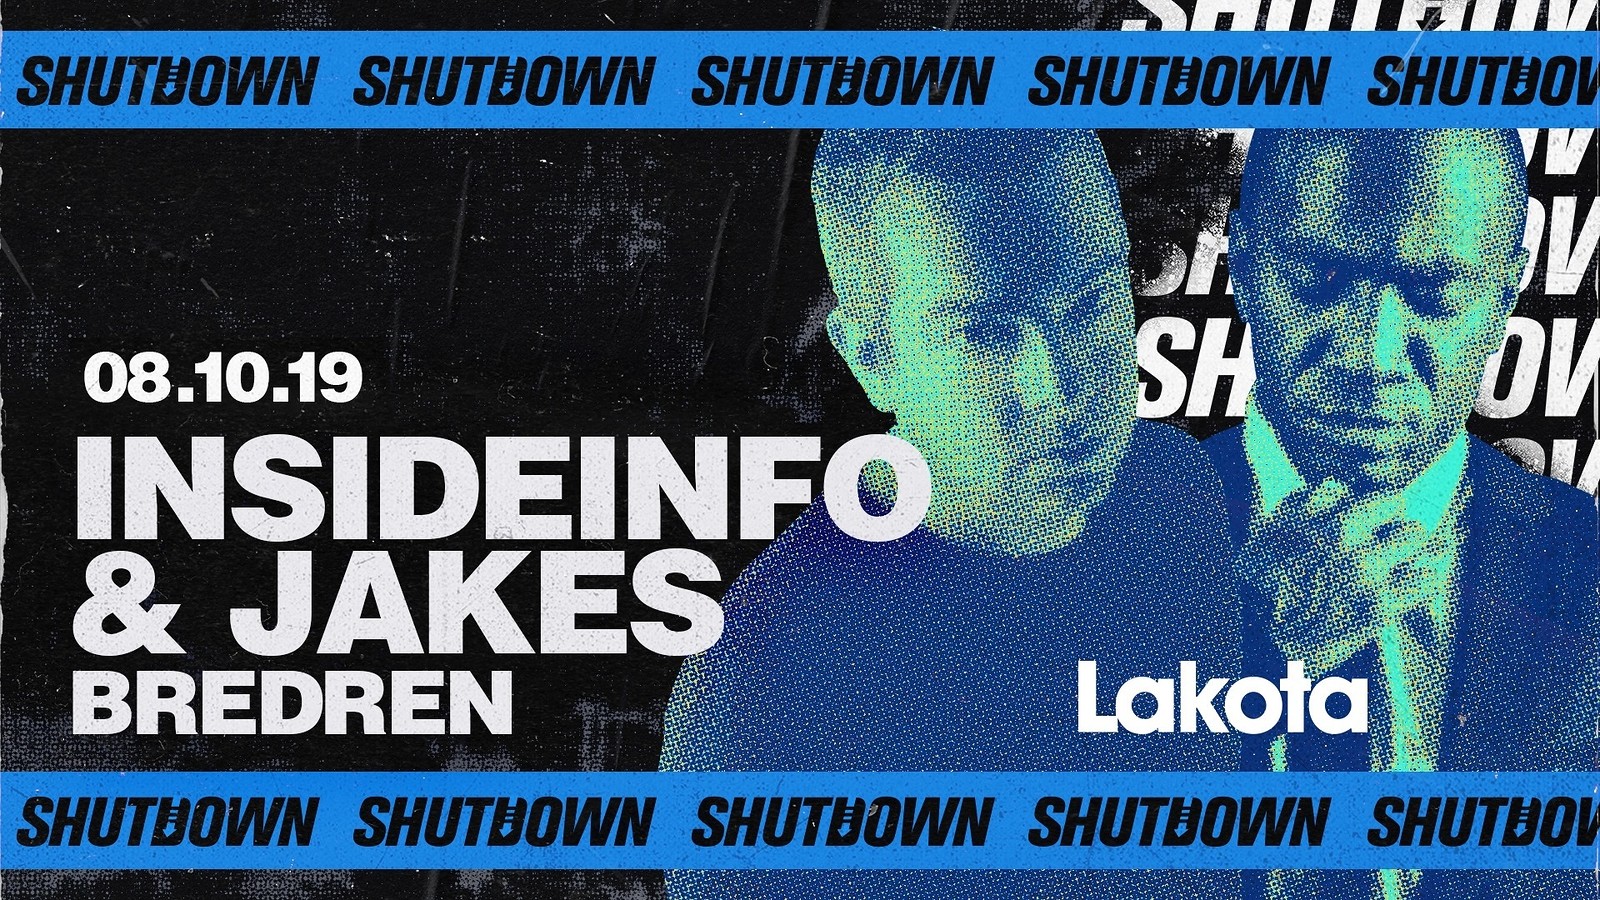 Shutdown: Insideinfo / Jakes / Bredren at Lakota